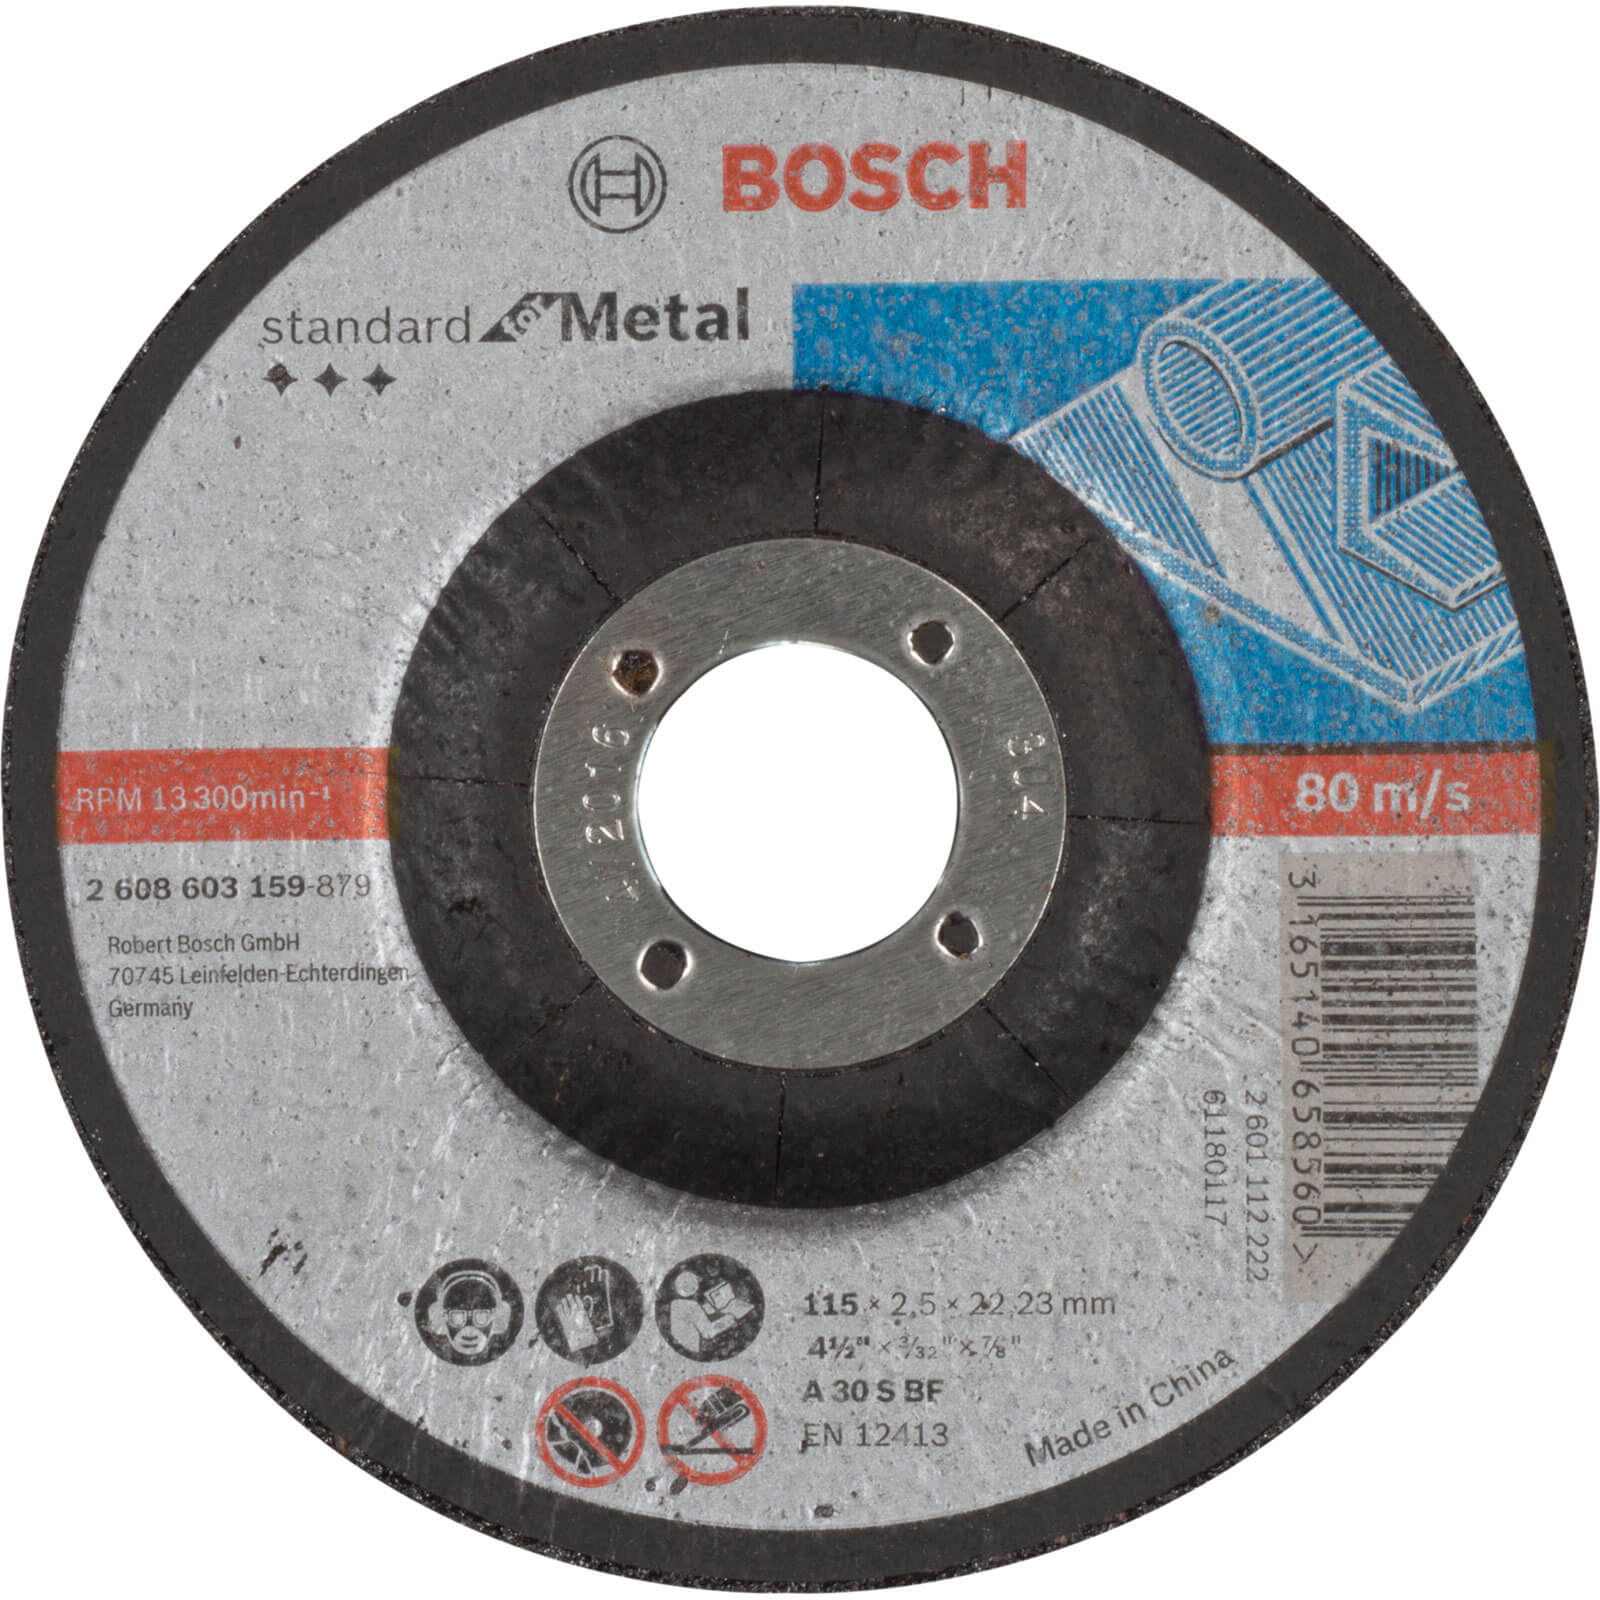 Photos - Cutting Disc Bosch Standard Depressed Centre Metal  115mm 2.5mm 22mm 260860 